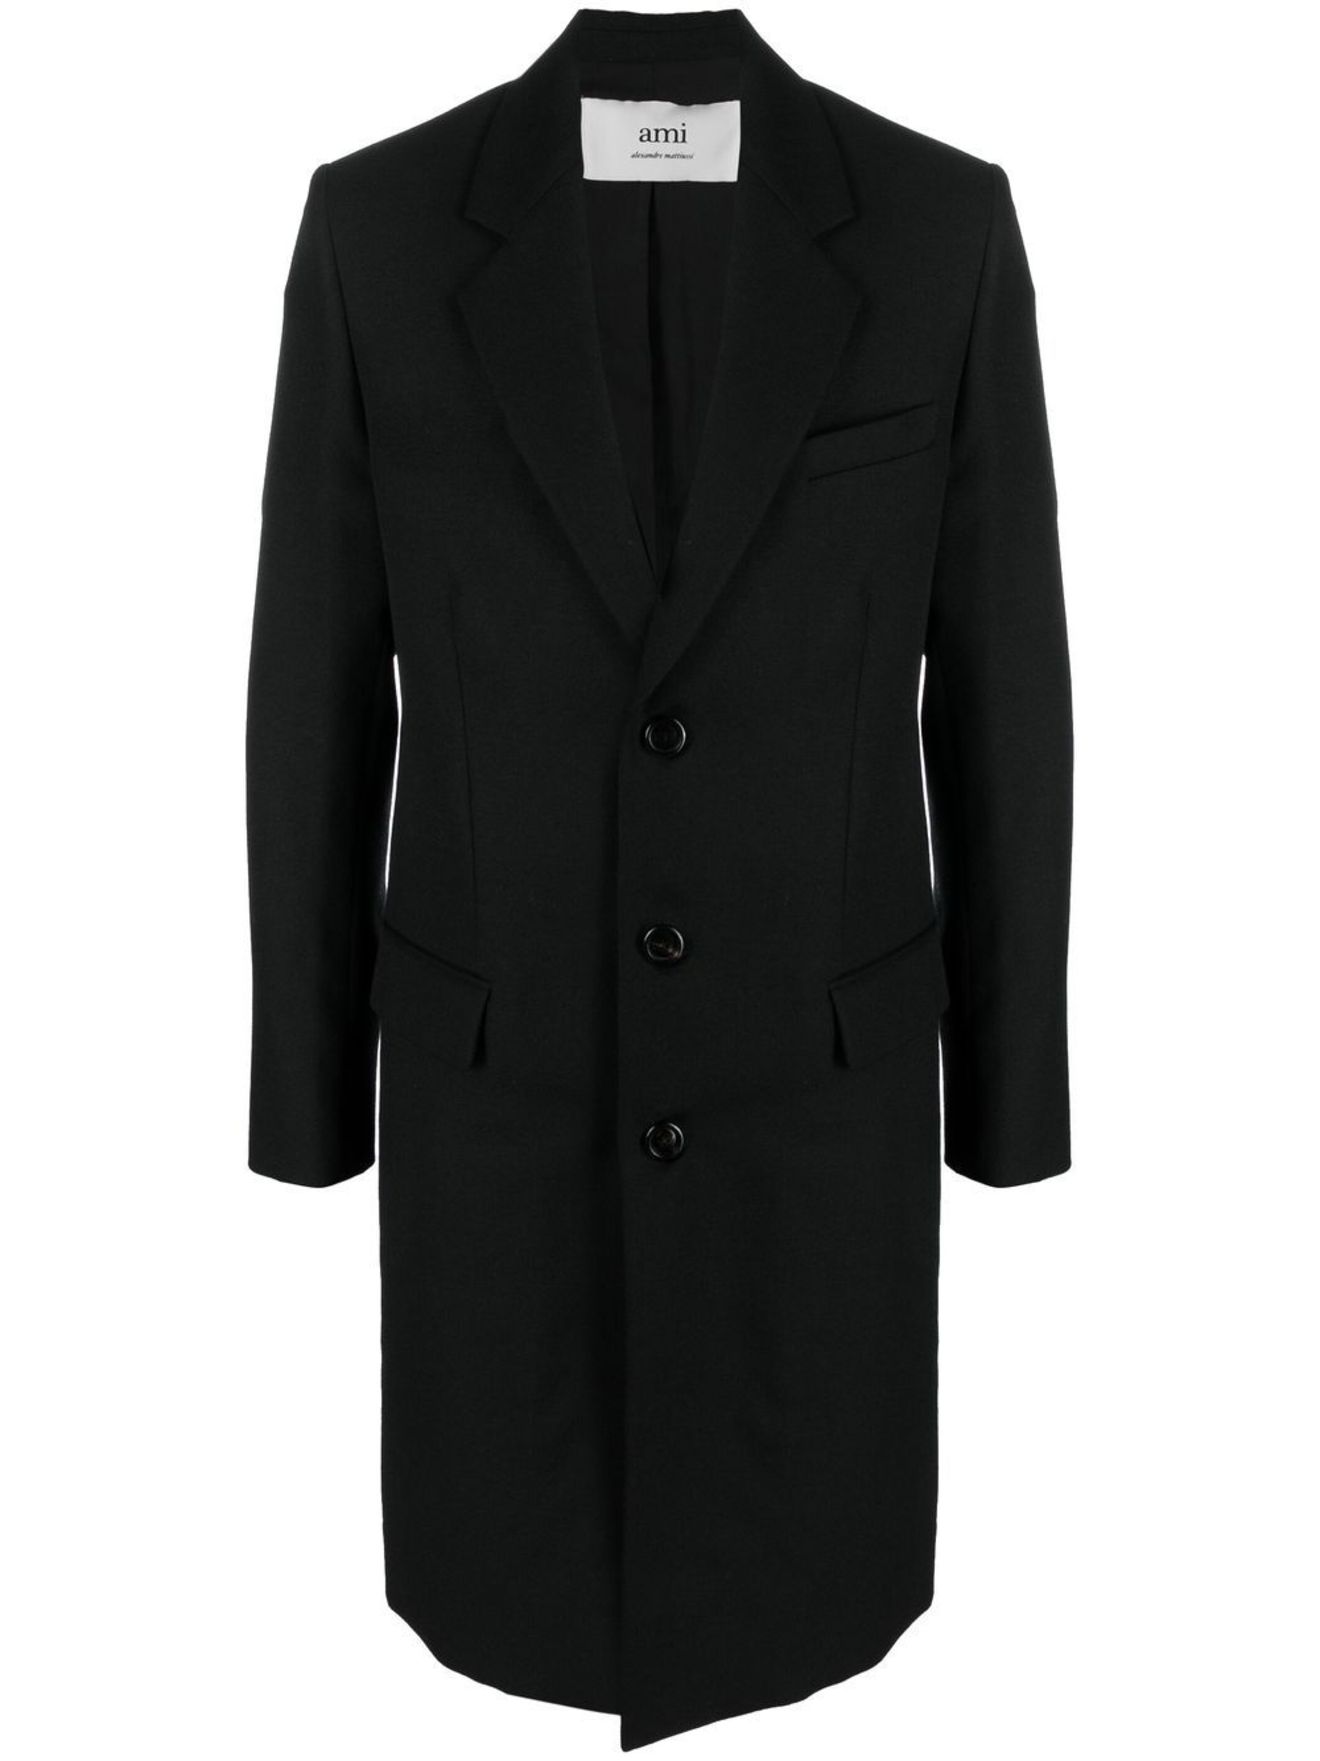 AMI Paris single-breasted wool coat black | MODES